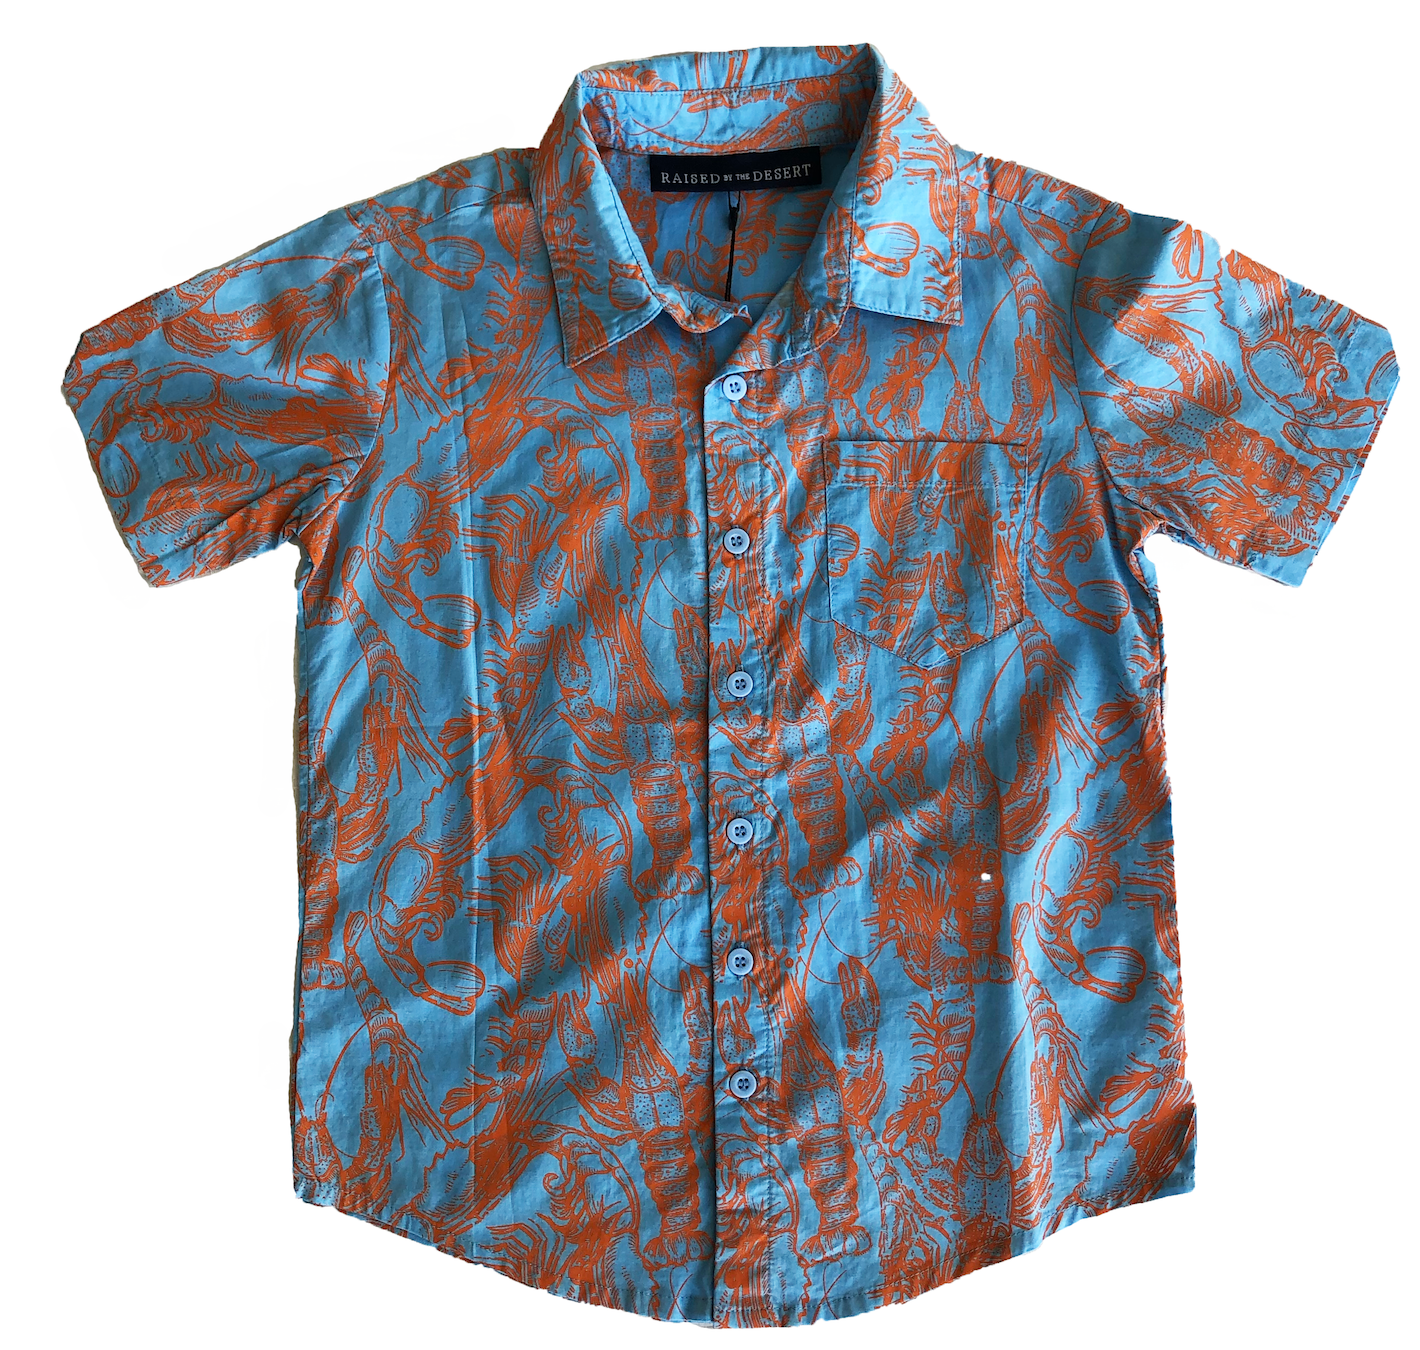 Henry Shirt - Prawn Cracker Turquoise